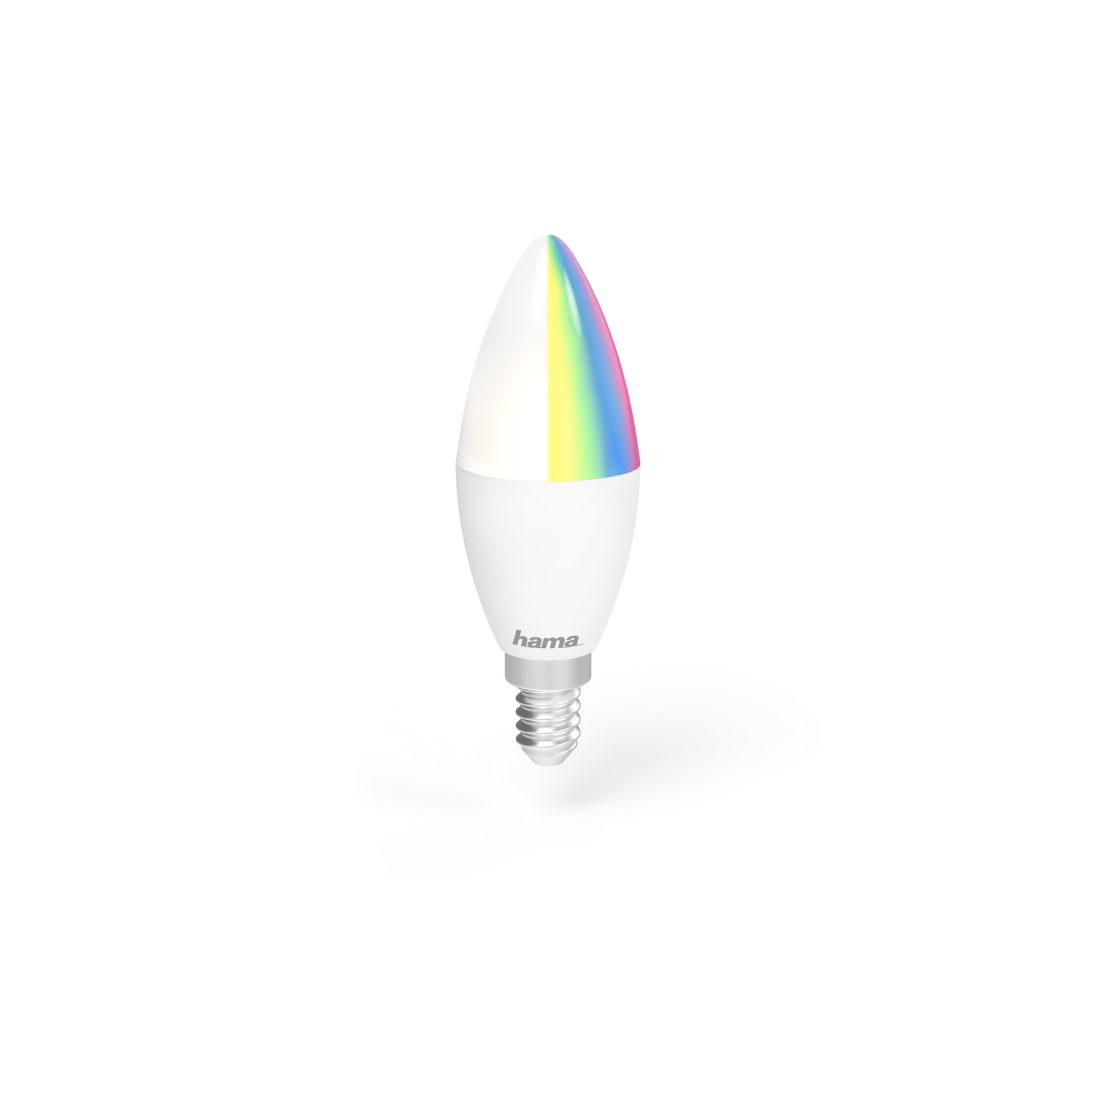 WLAN-LED-Lampe, E14, 5,5W, RGBW, dimmbar, Kerze, für Sprach-/App-Steuerung  | Hama